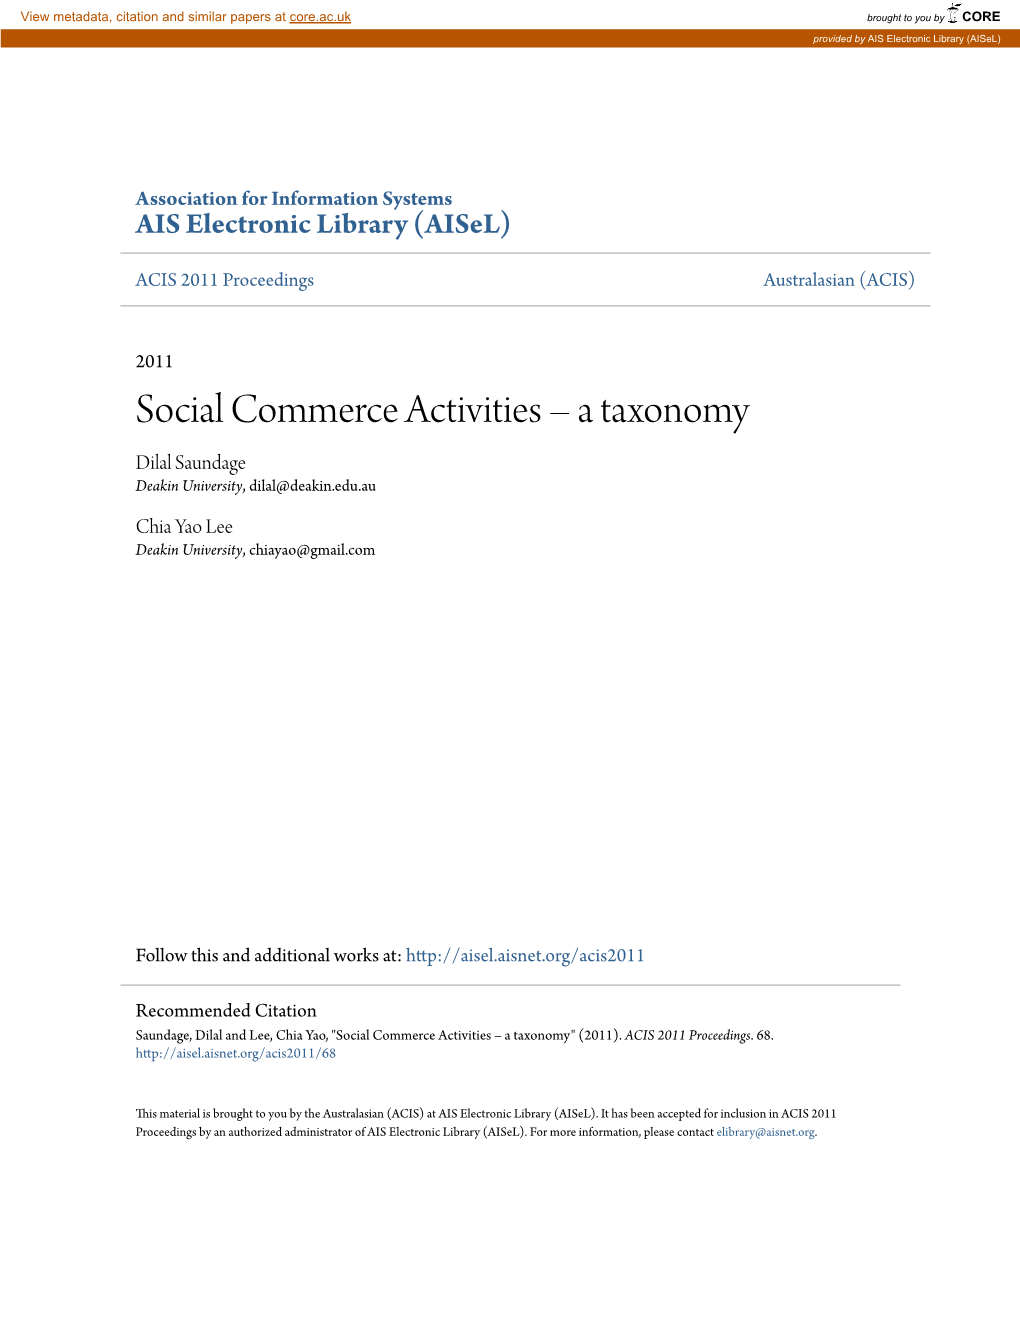 Social Commerce Activities – a Taxonomy Dilal Saundage Deakin University, Dilal@Deakin.Edu.Au